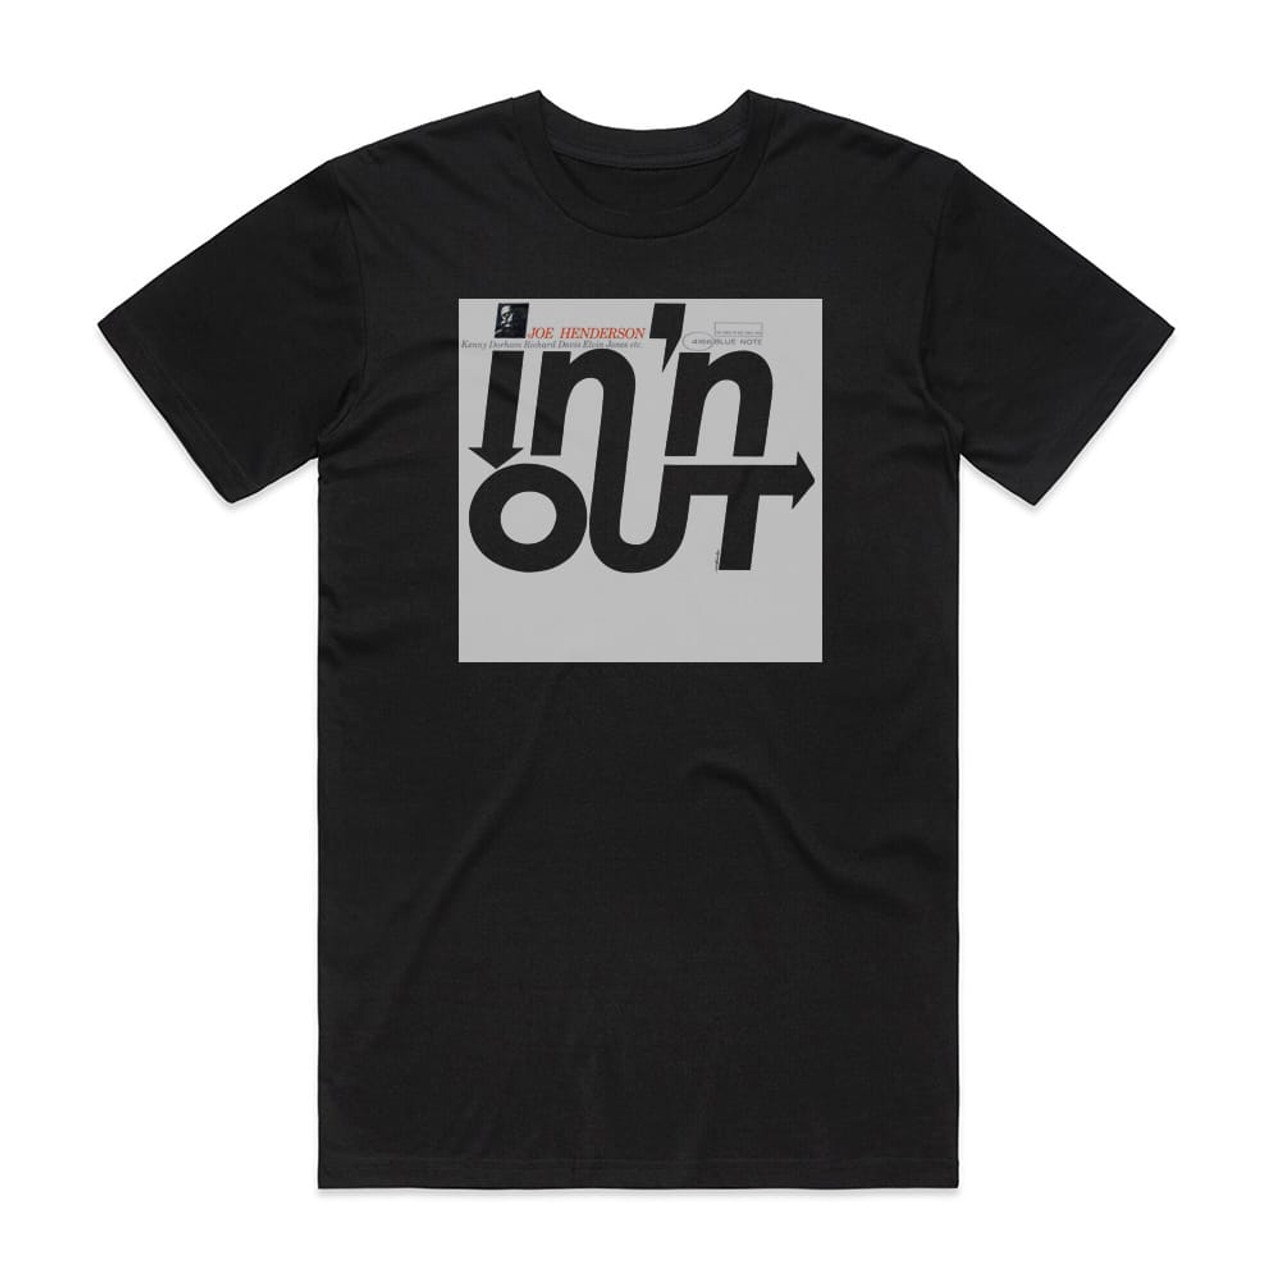 Joe Henderson In N Out Album Cover T-Shirt Black